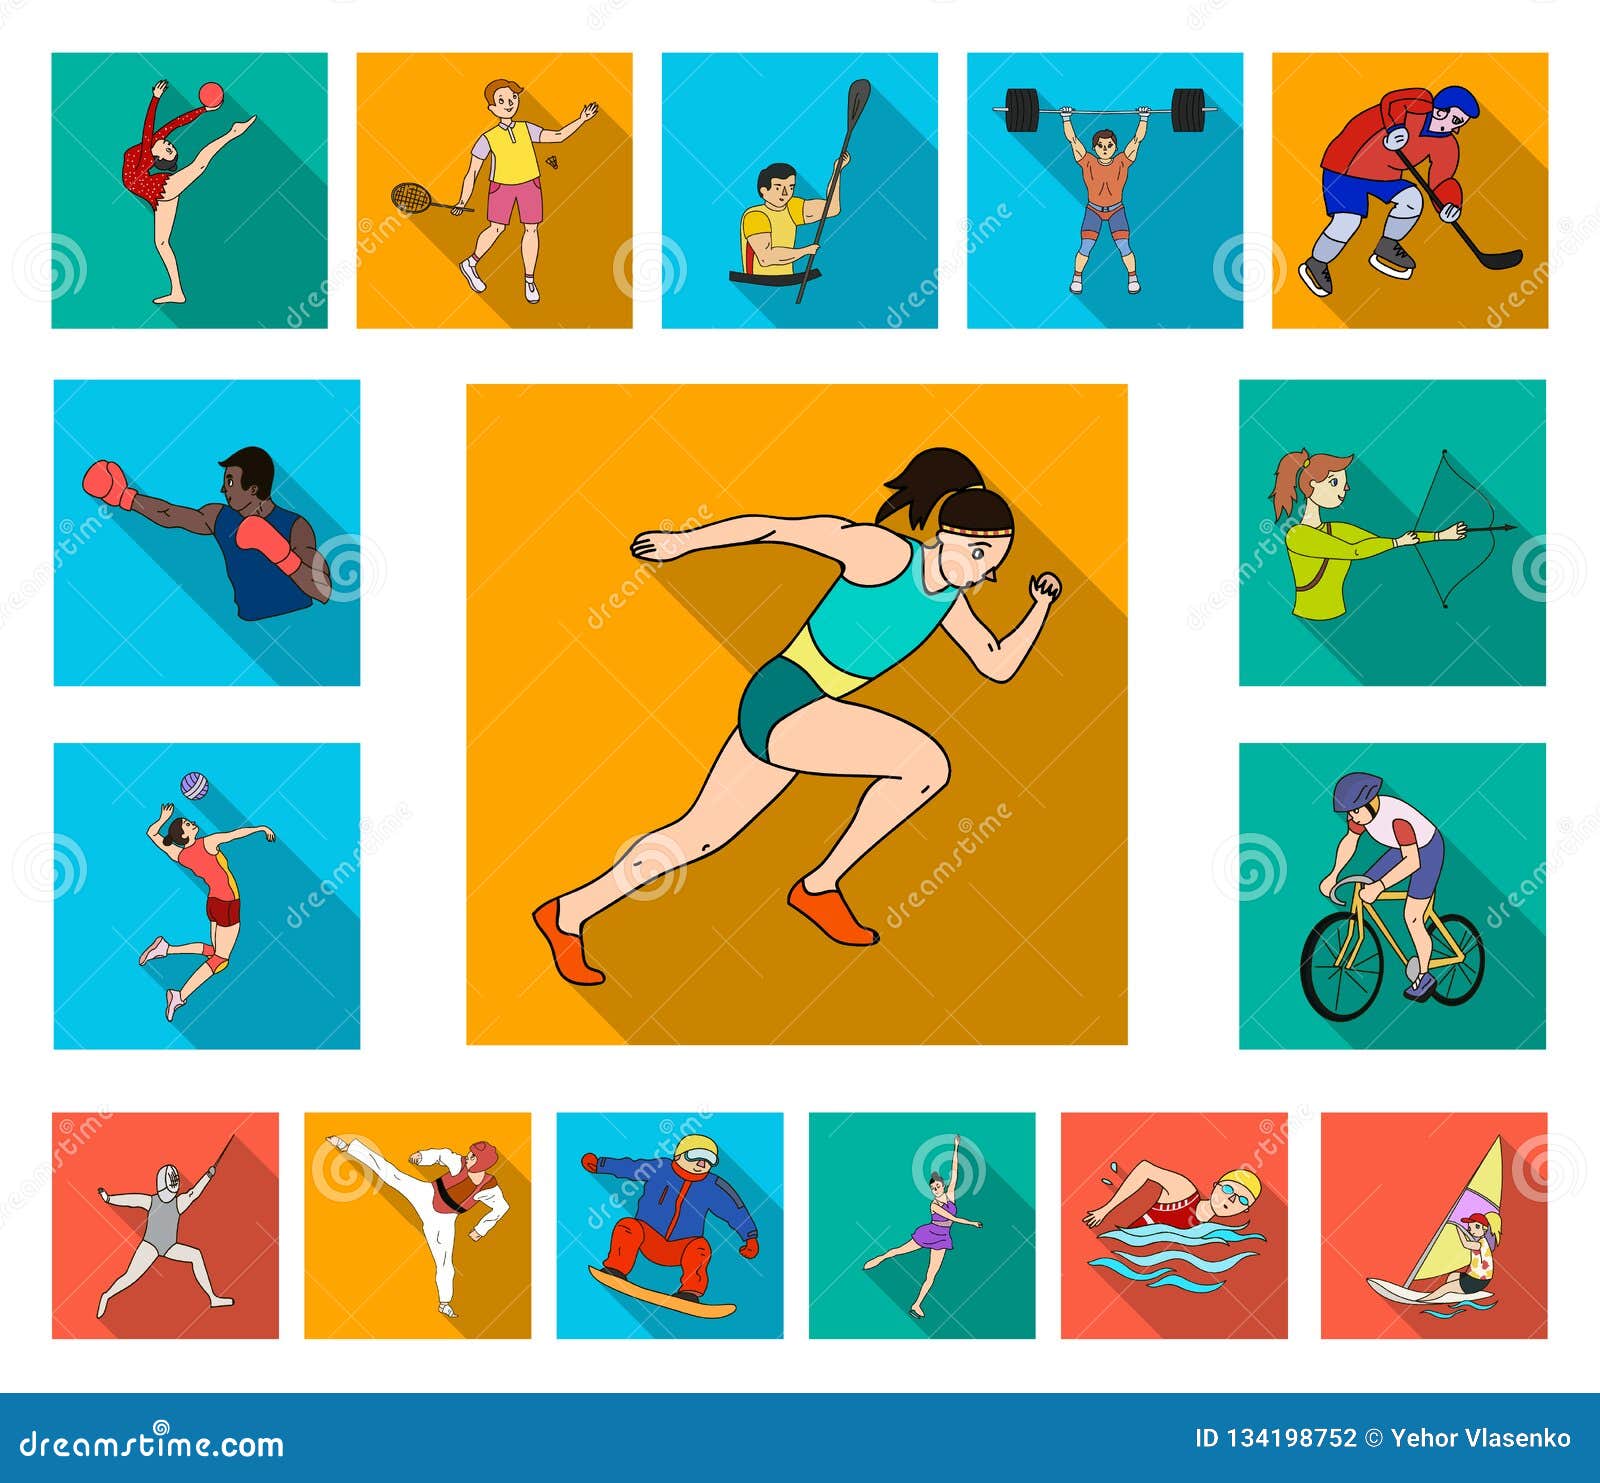 Different kind of sport. Летние виды спорта. Иллюстрации с разными видами спорта. Виды спорта для детей. Летние виды спорта рисунки.